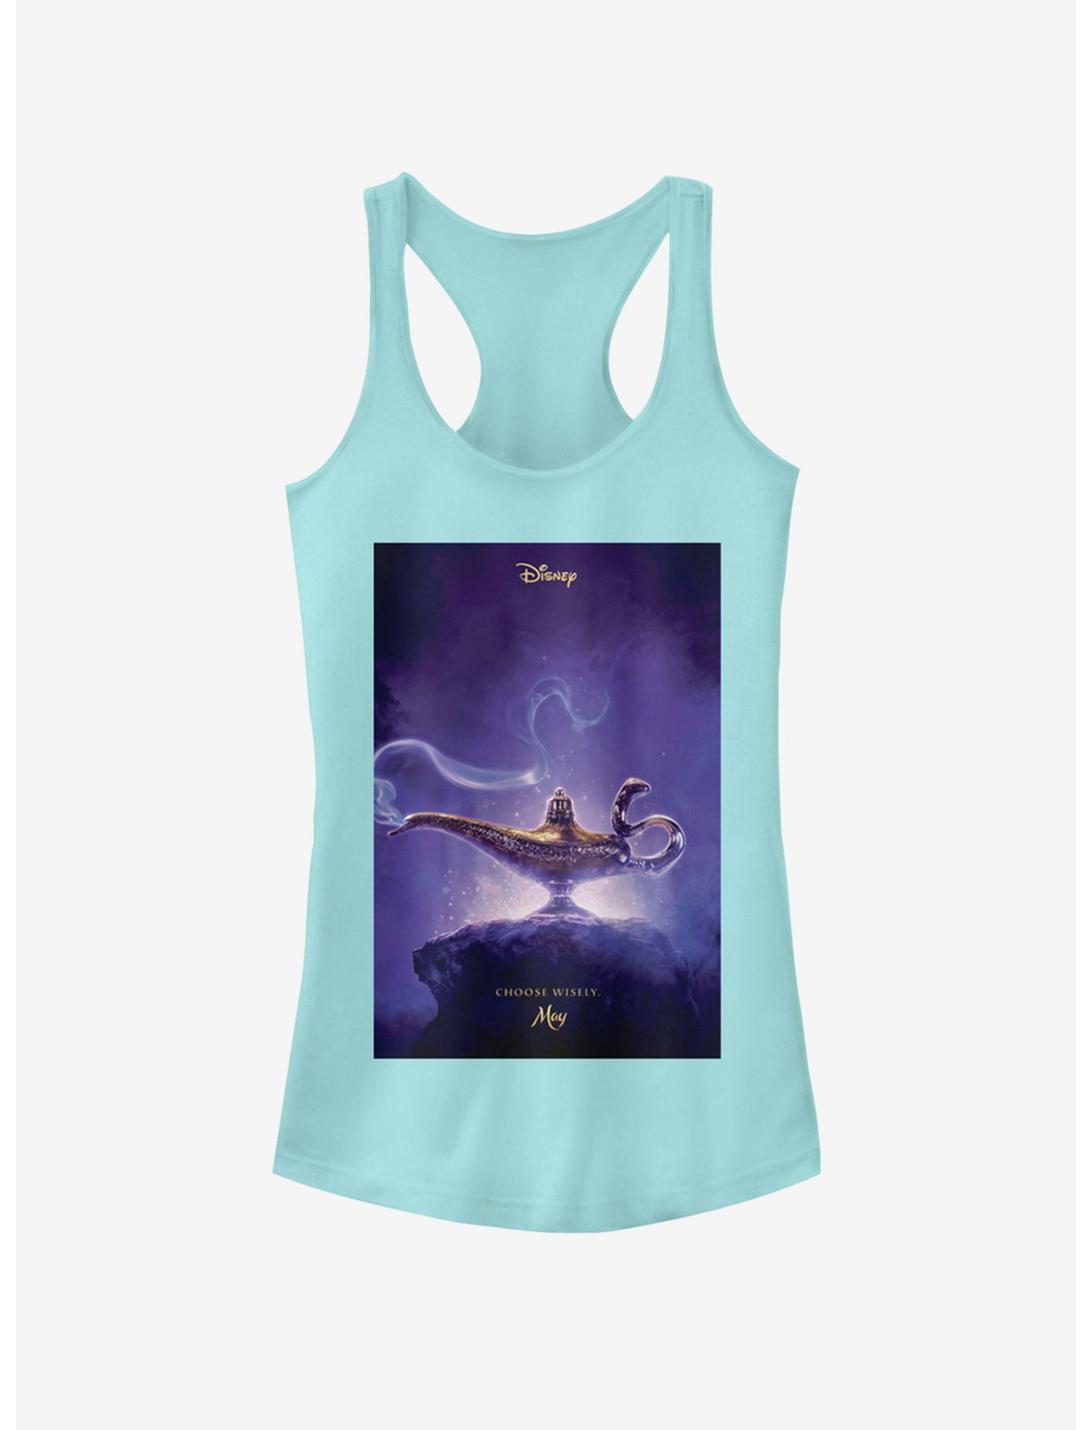 Disney Aladdin 2019 Aladdin Live Action Poster Girls Tank, CANCUN, hi-res